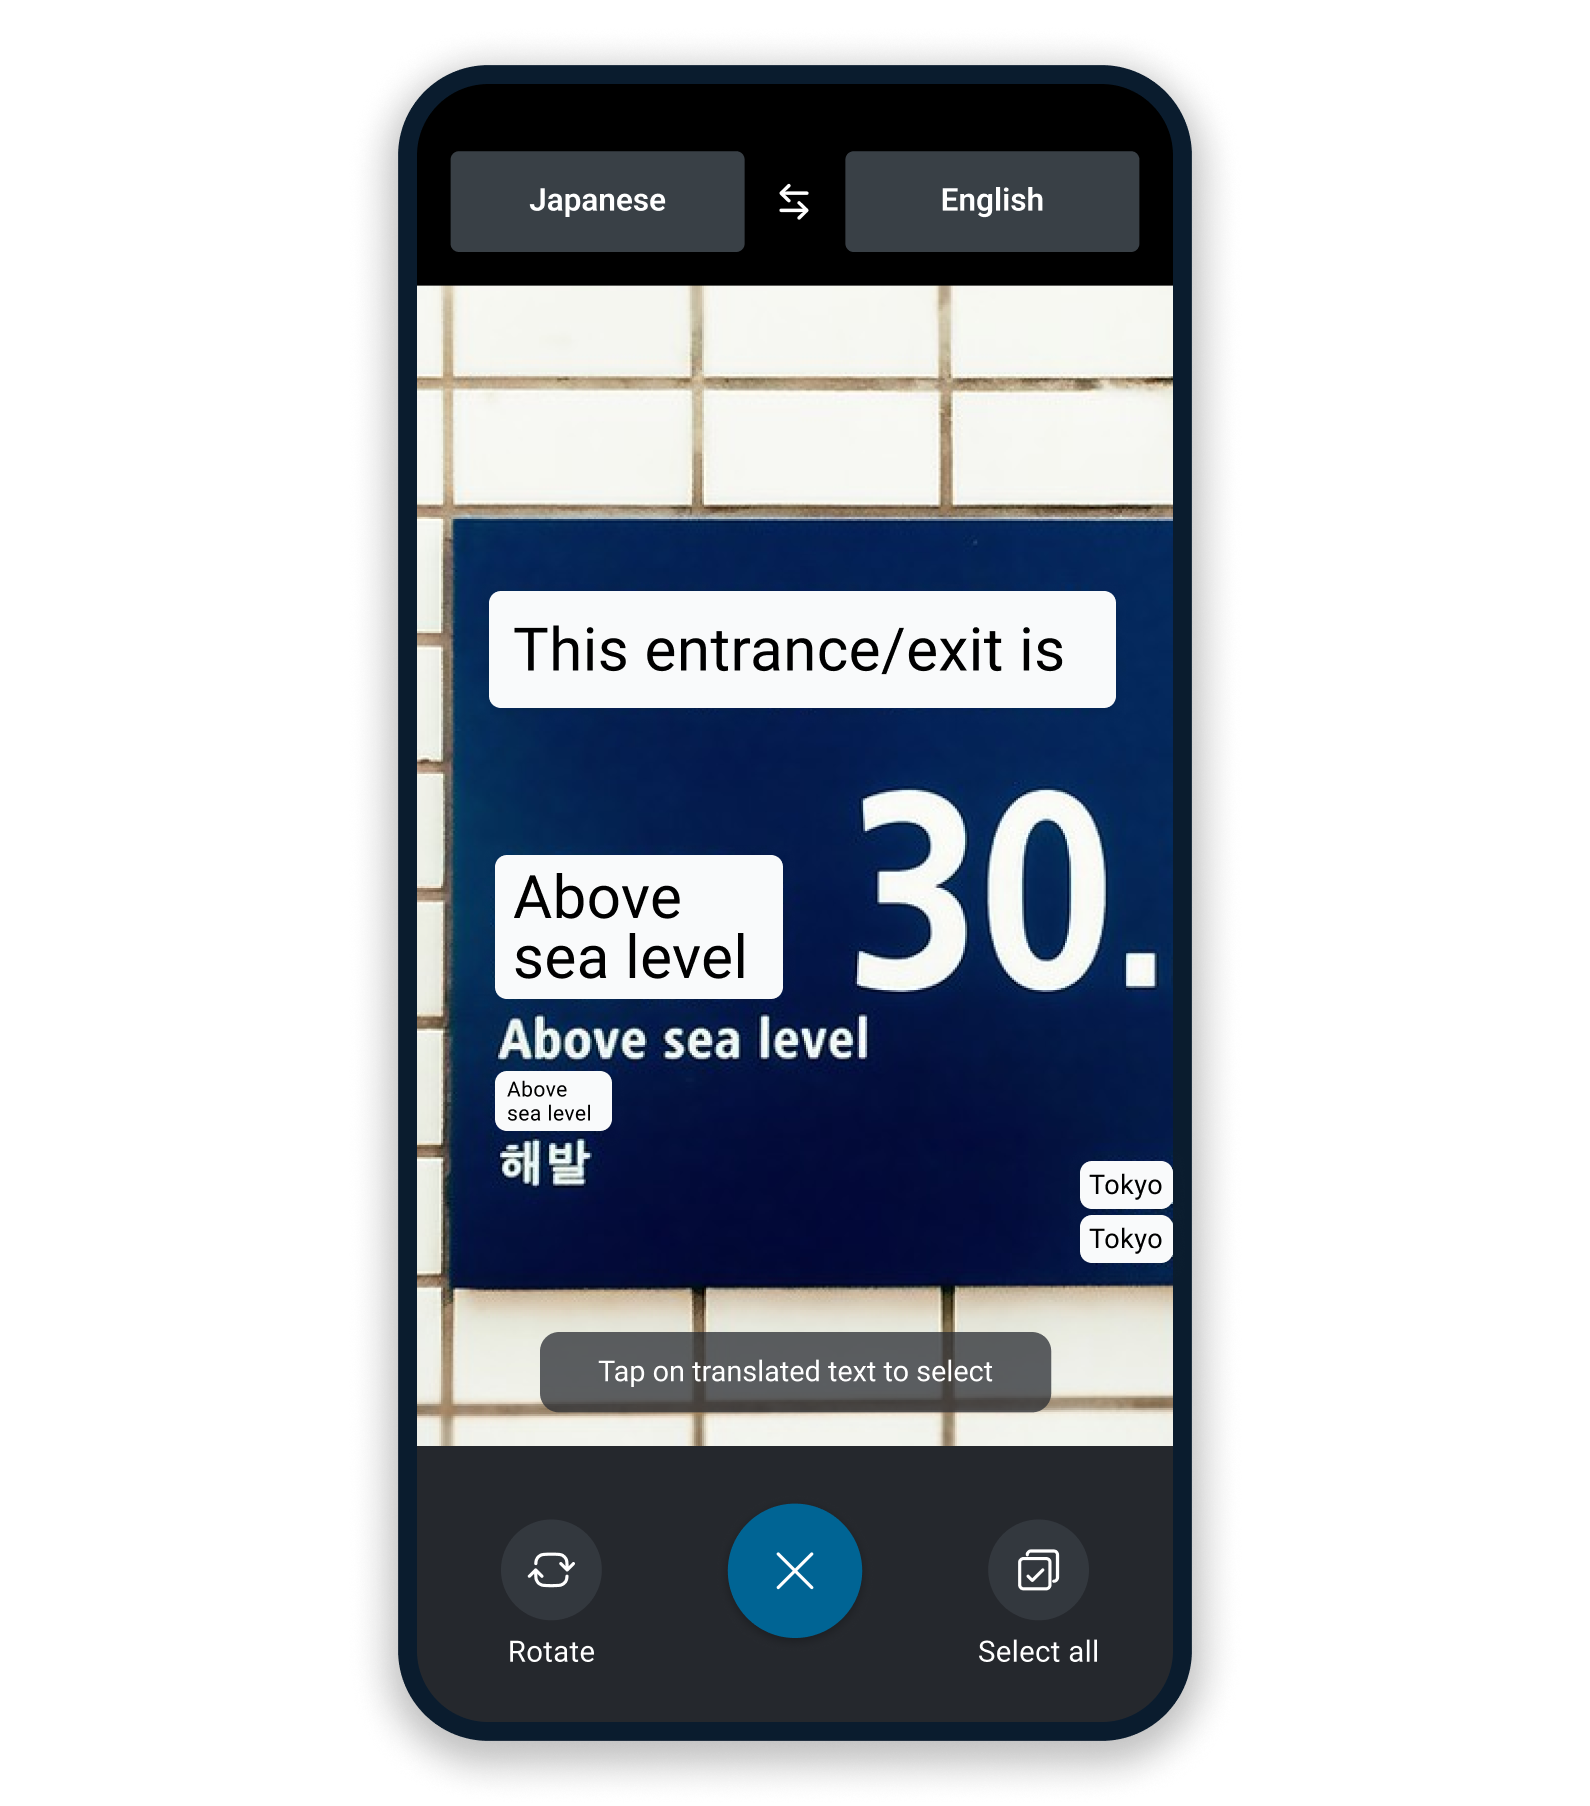 DeepLアプリのカメラ機能で日本語から英語に翻訳された道路標識を表示するスマートフォン